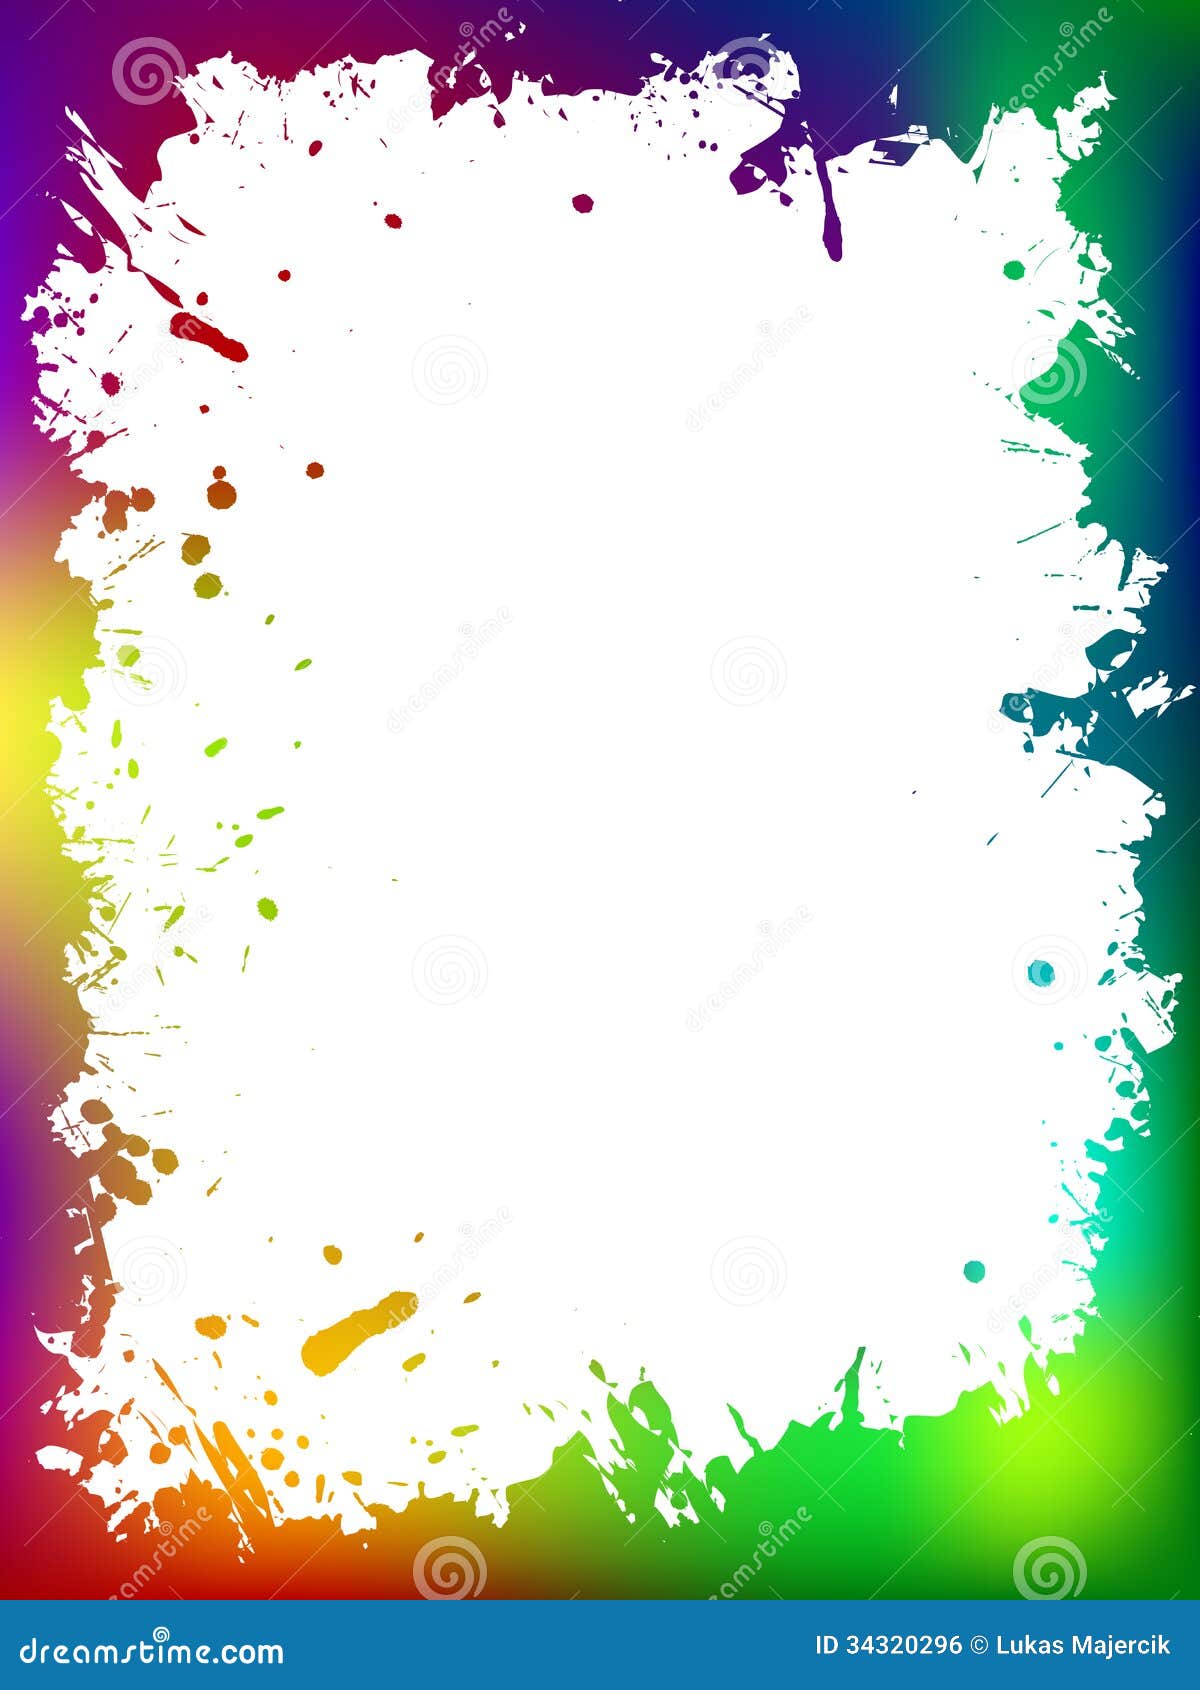 Colorful grunge border stock vector. Image of splatter - 34320296